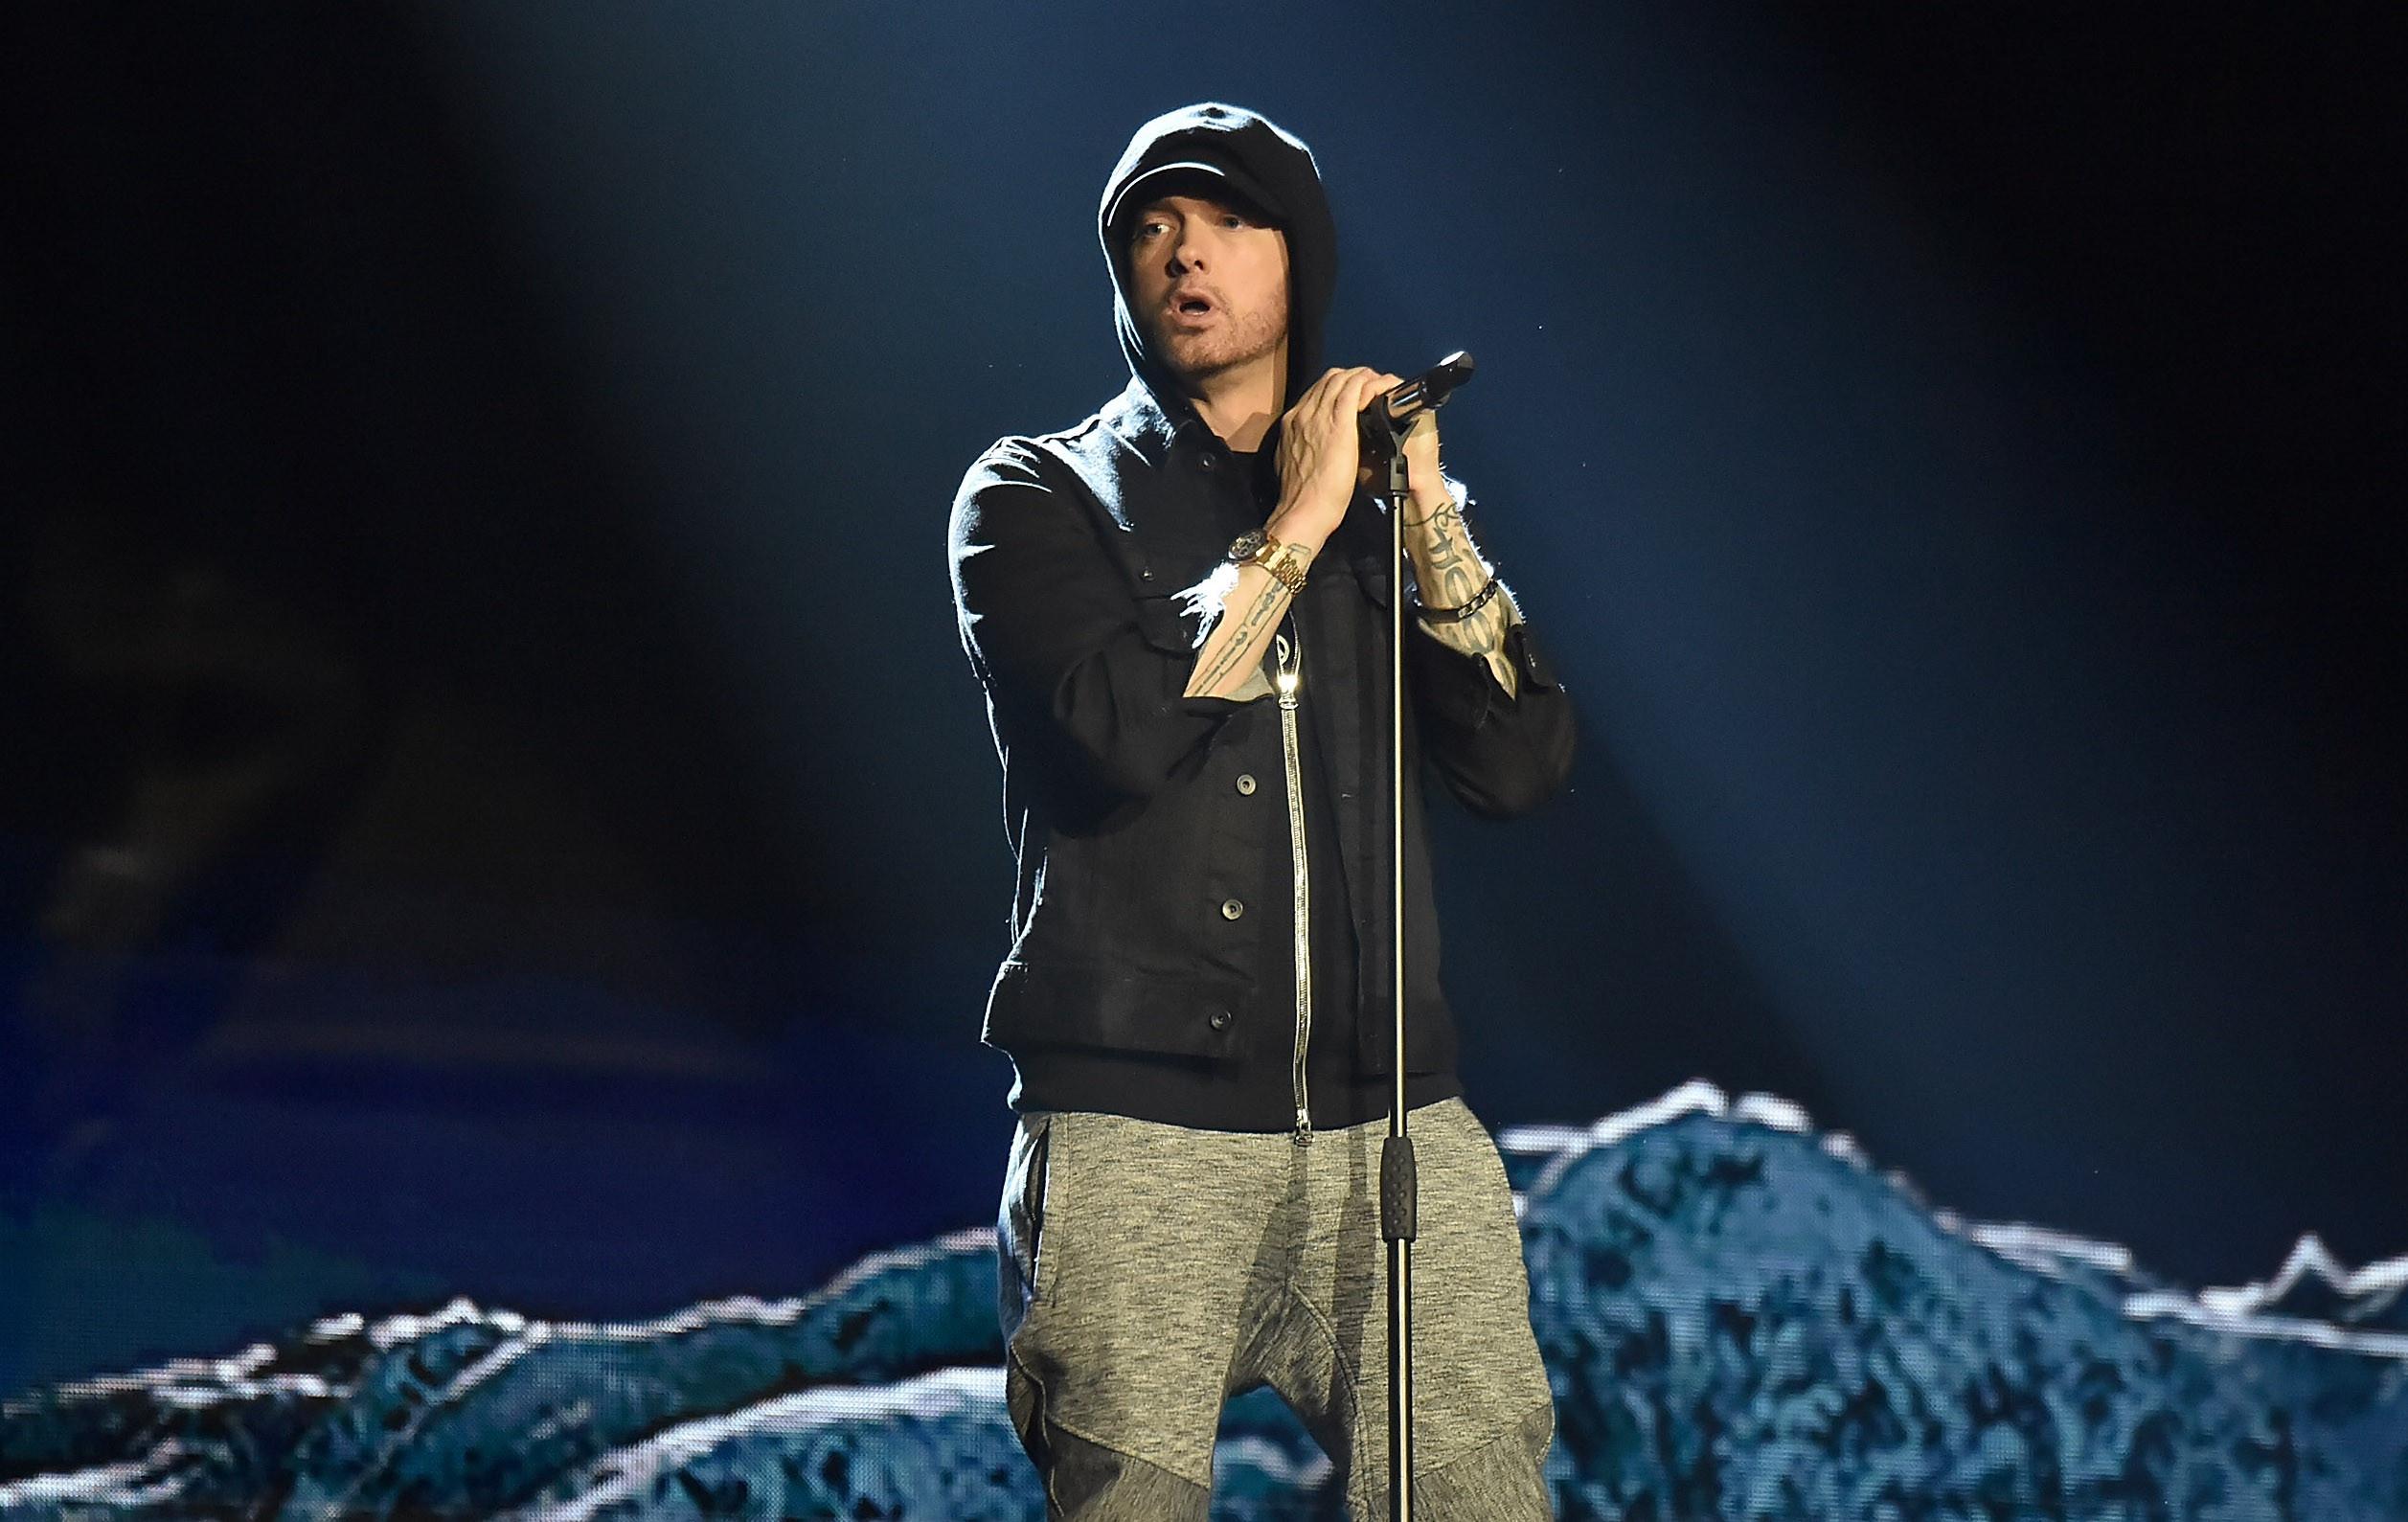 Eminem 2019 Wallpapers Wallpaper Cave